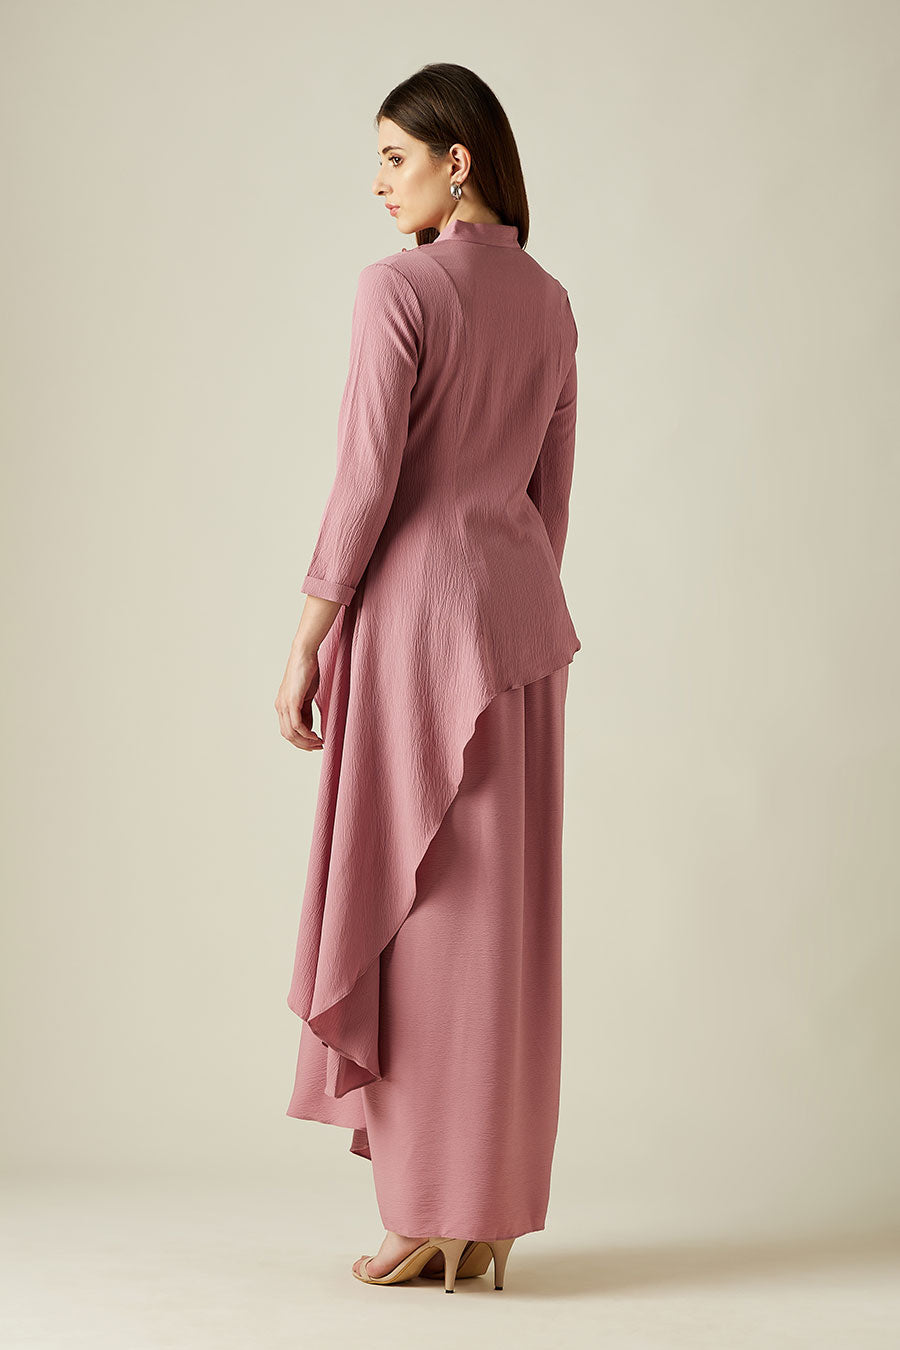 Sofie Pink Tunic & Drape Skirt Co-Ord Set